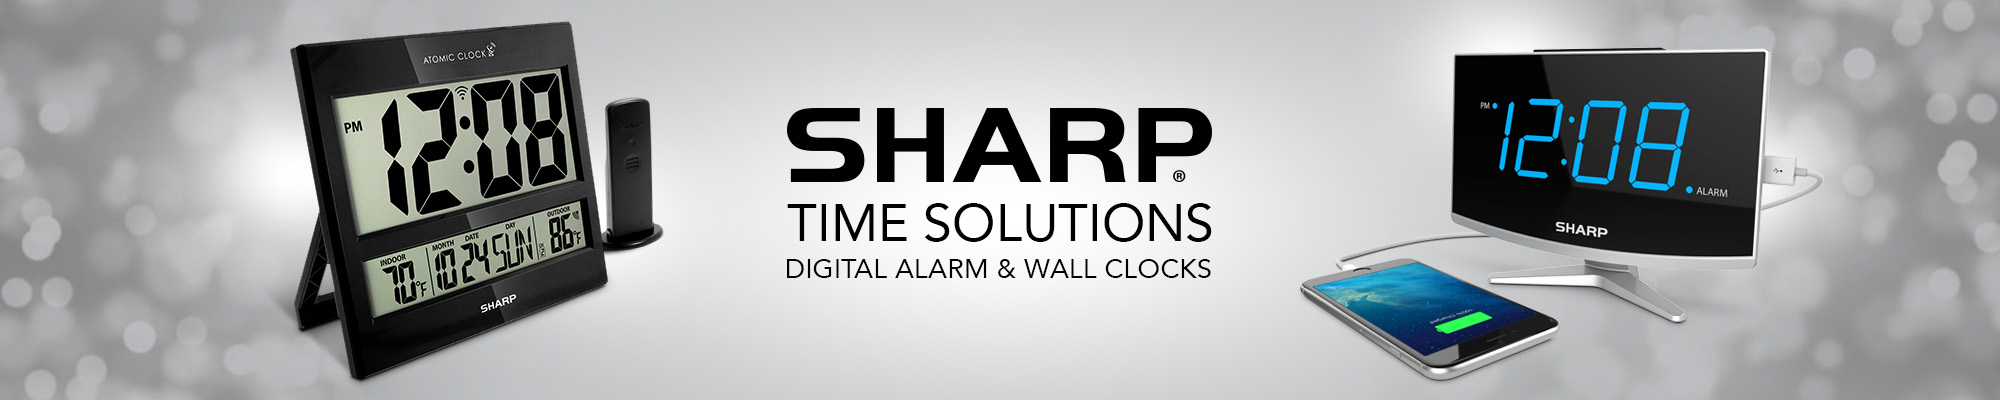 sharp travel alarm clock instructions